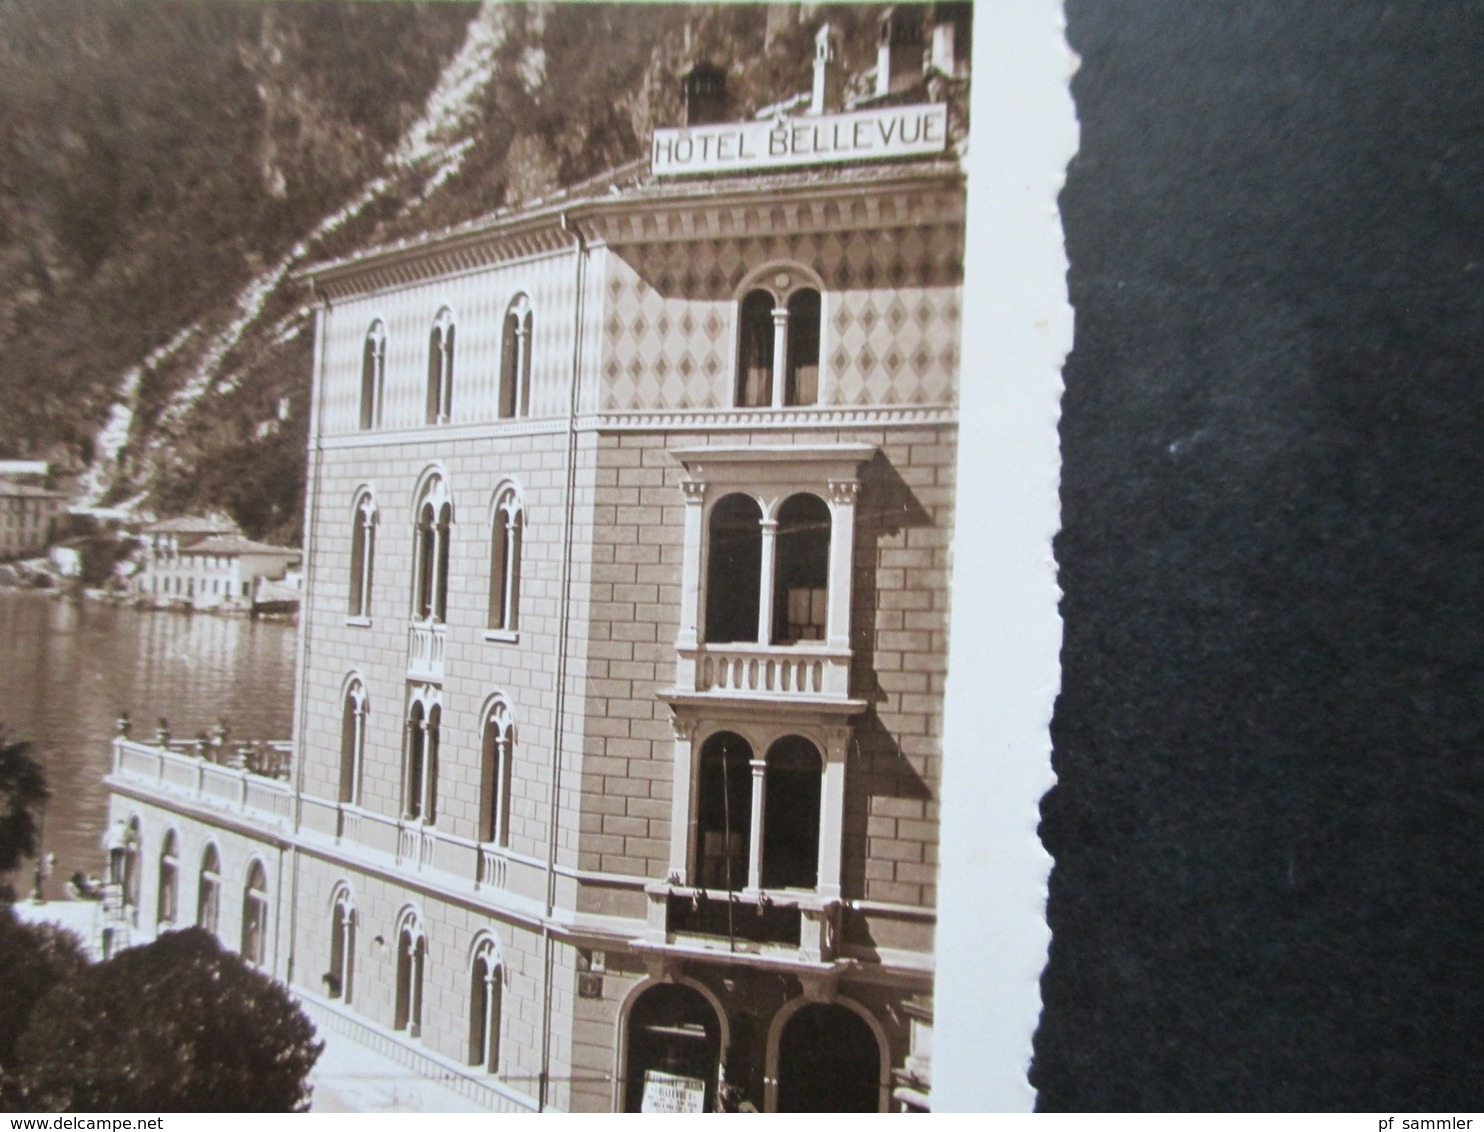 Echtfoto AK Italien 1934 Riva Giardini Caducci Mit Hotel Bellevue Bildseitig Frankiert! - Hotels & Restaurants